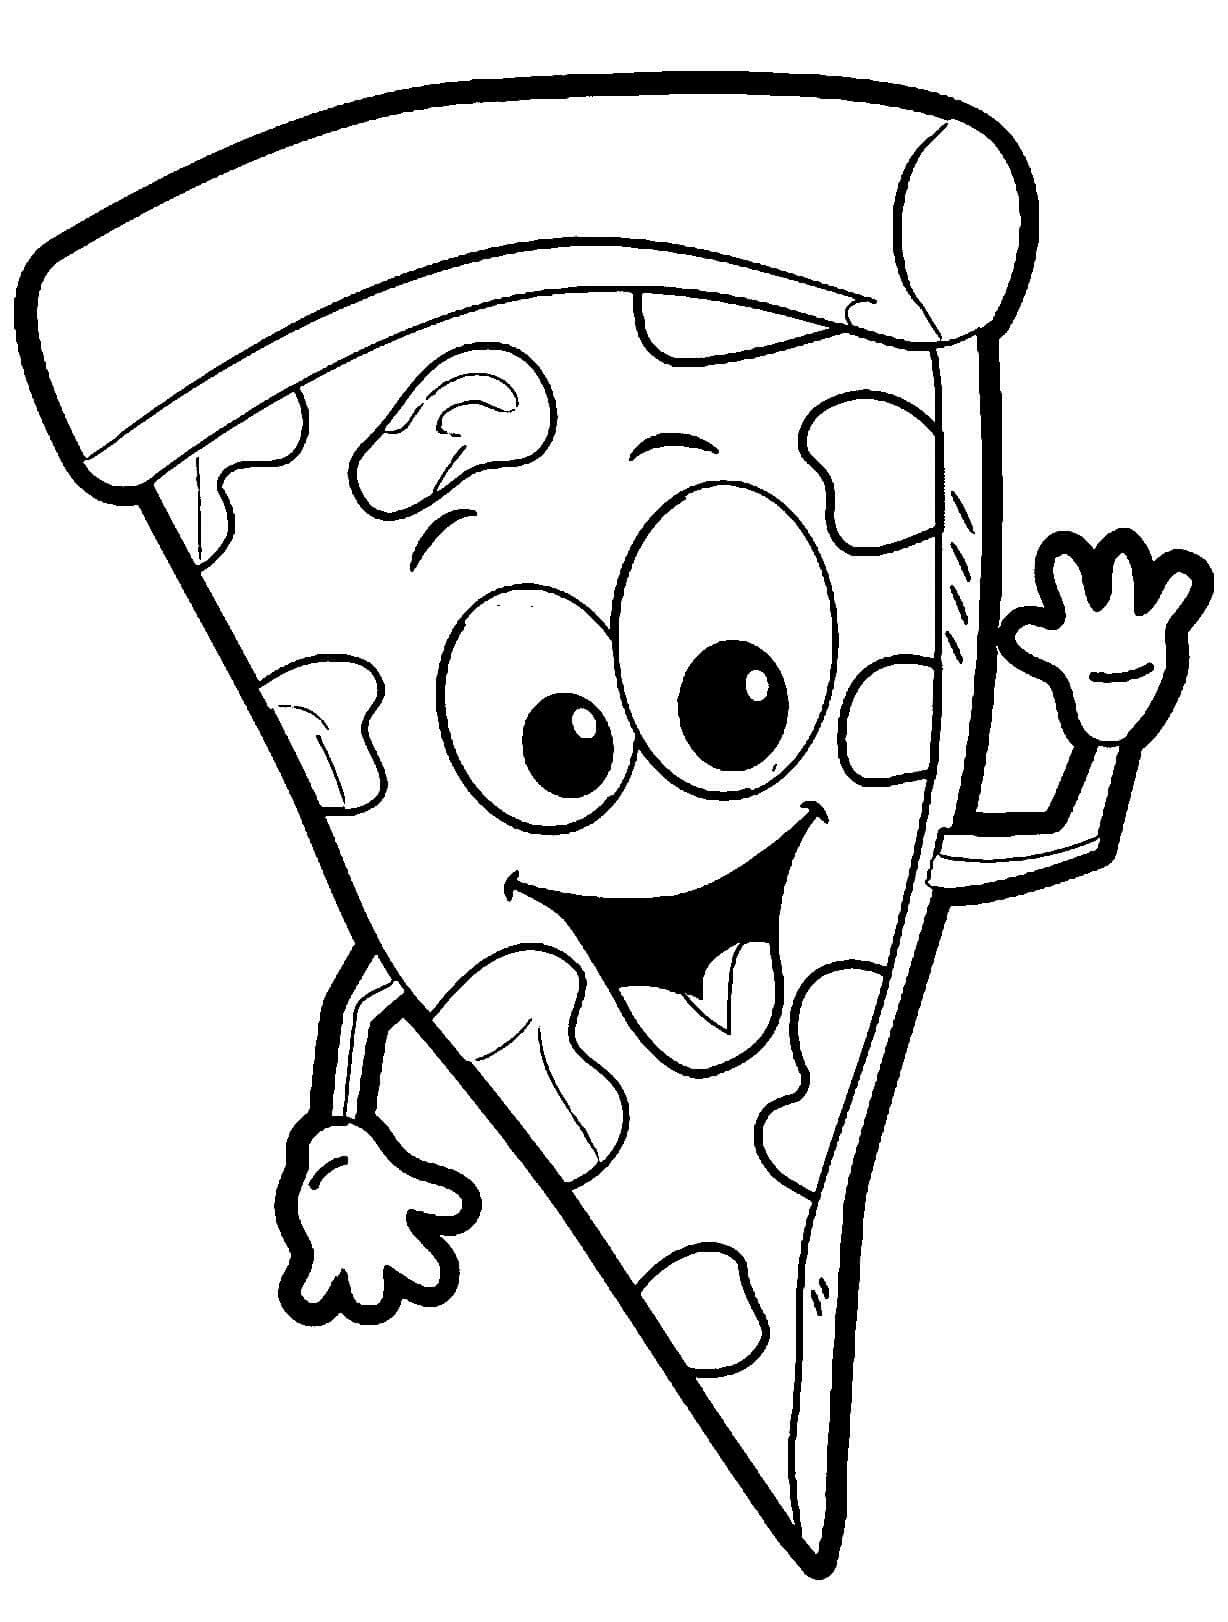 Mr. Pizza Divertido para colorir